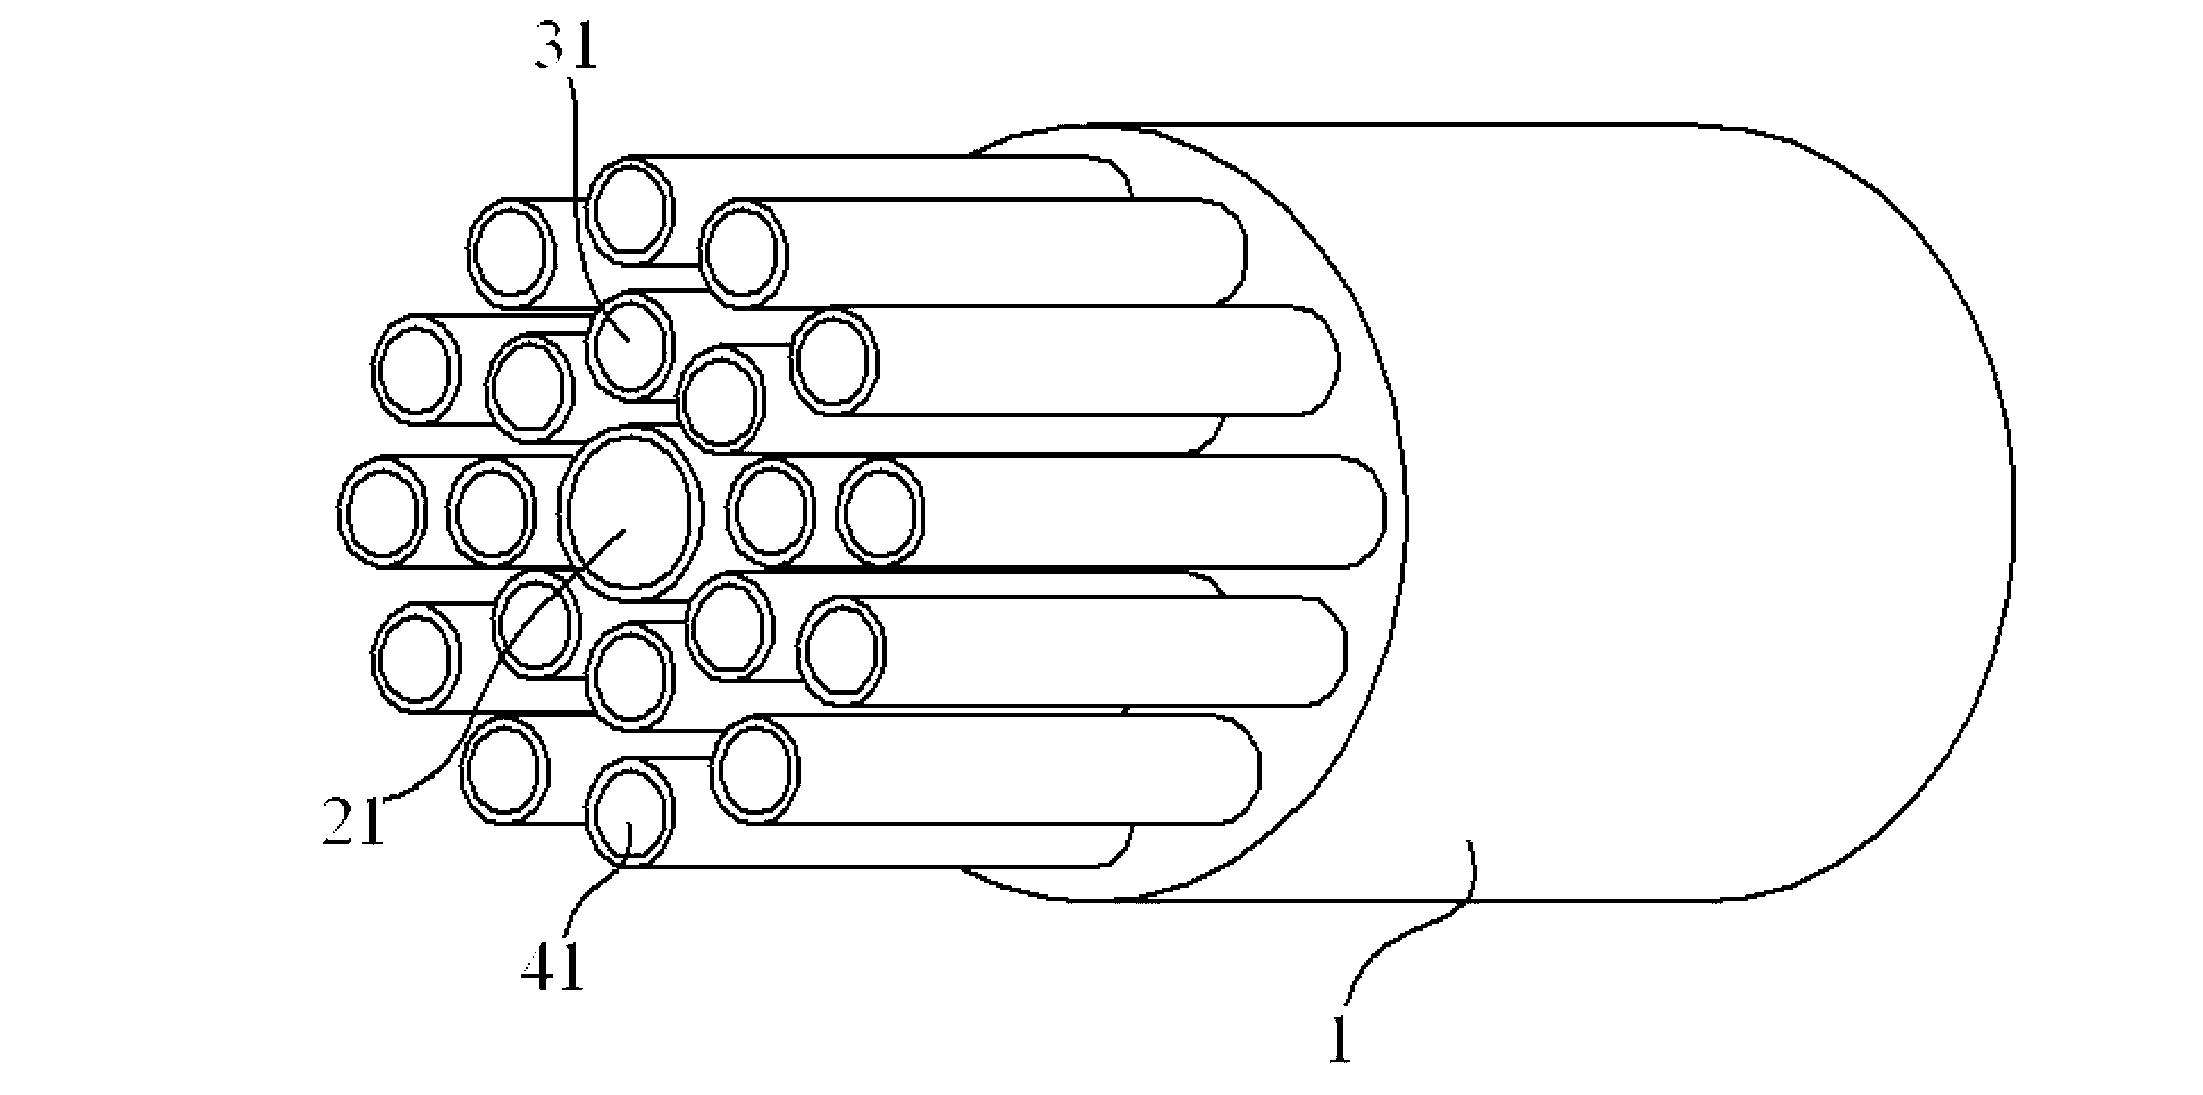 Double-channel ceramic filtering membrane